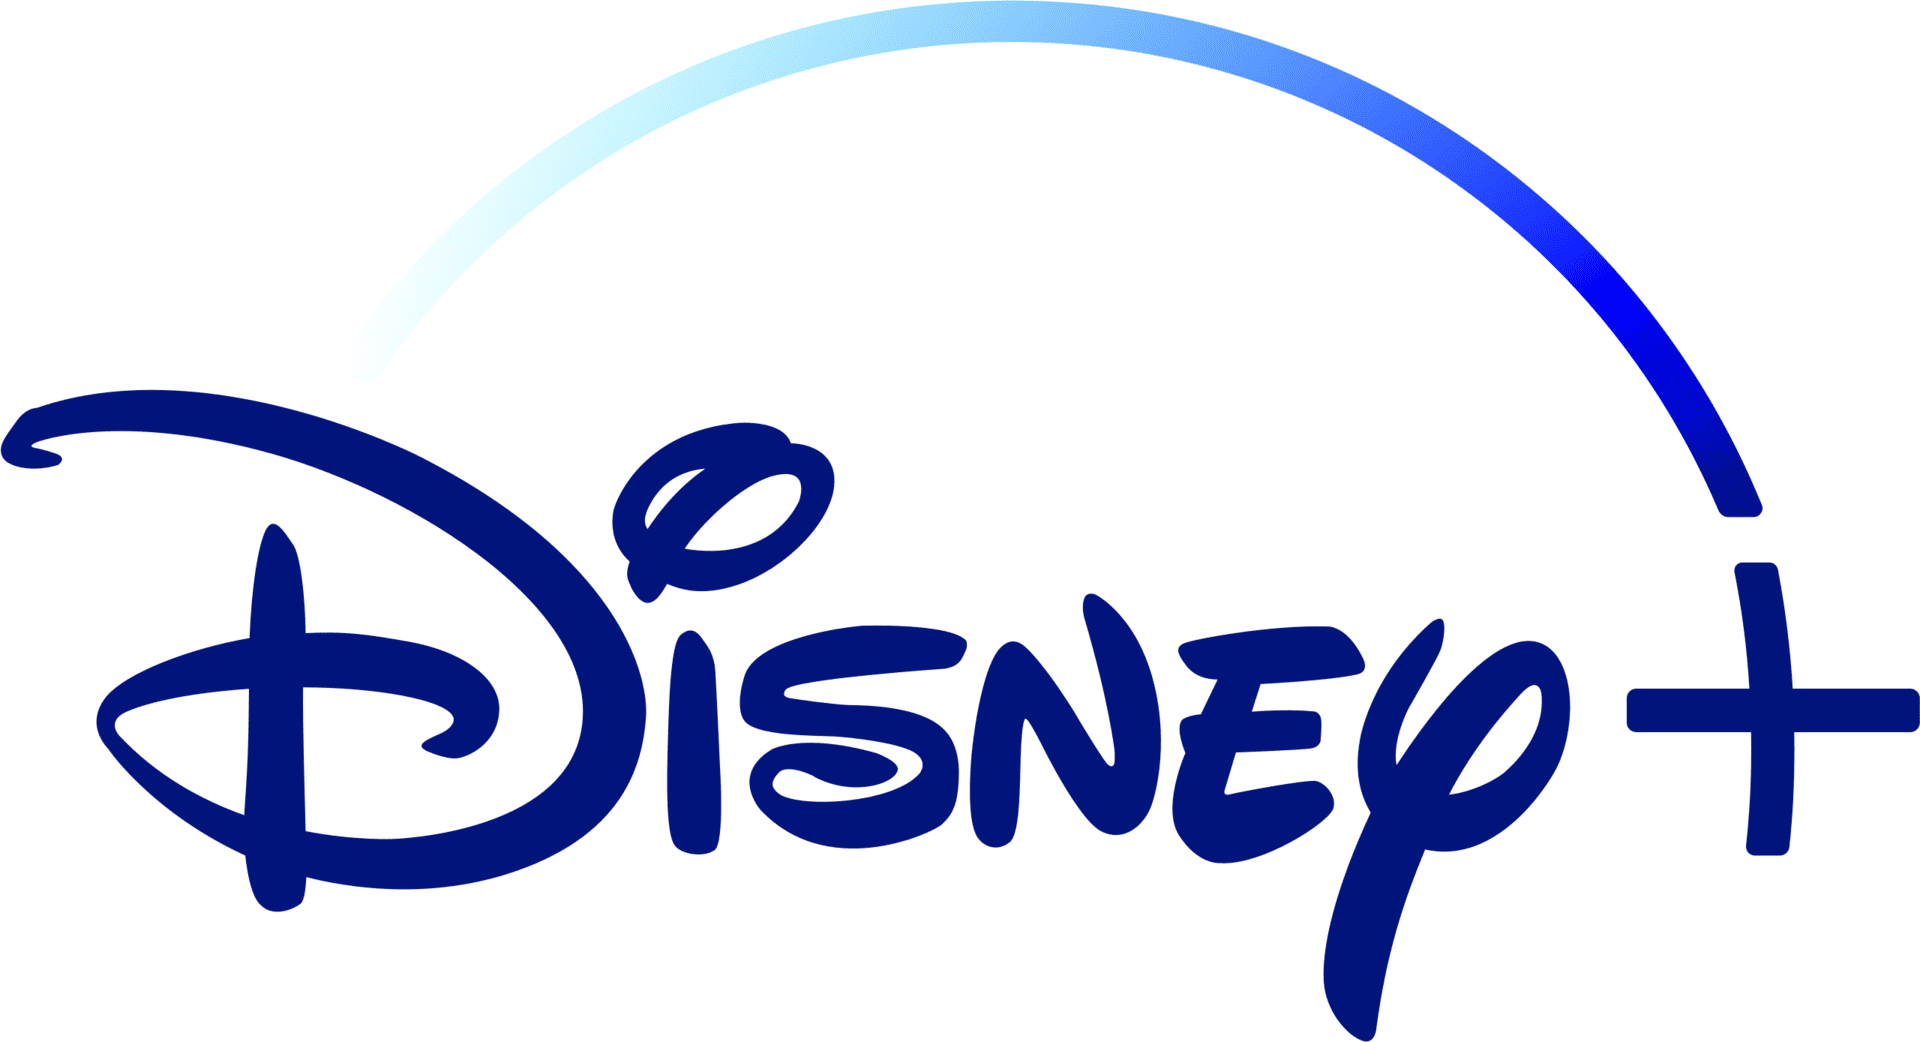 Disney+_logo